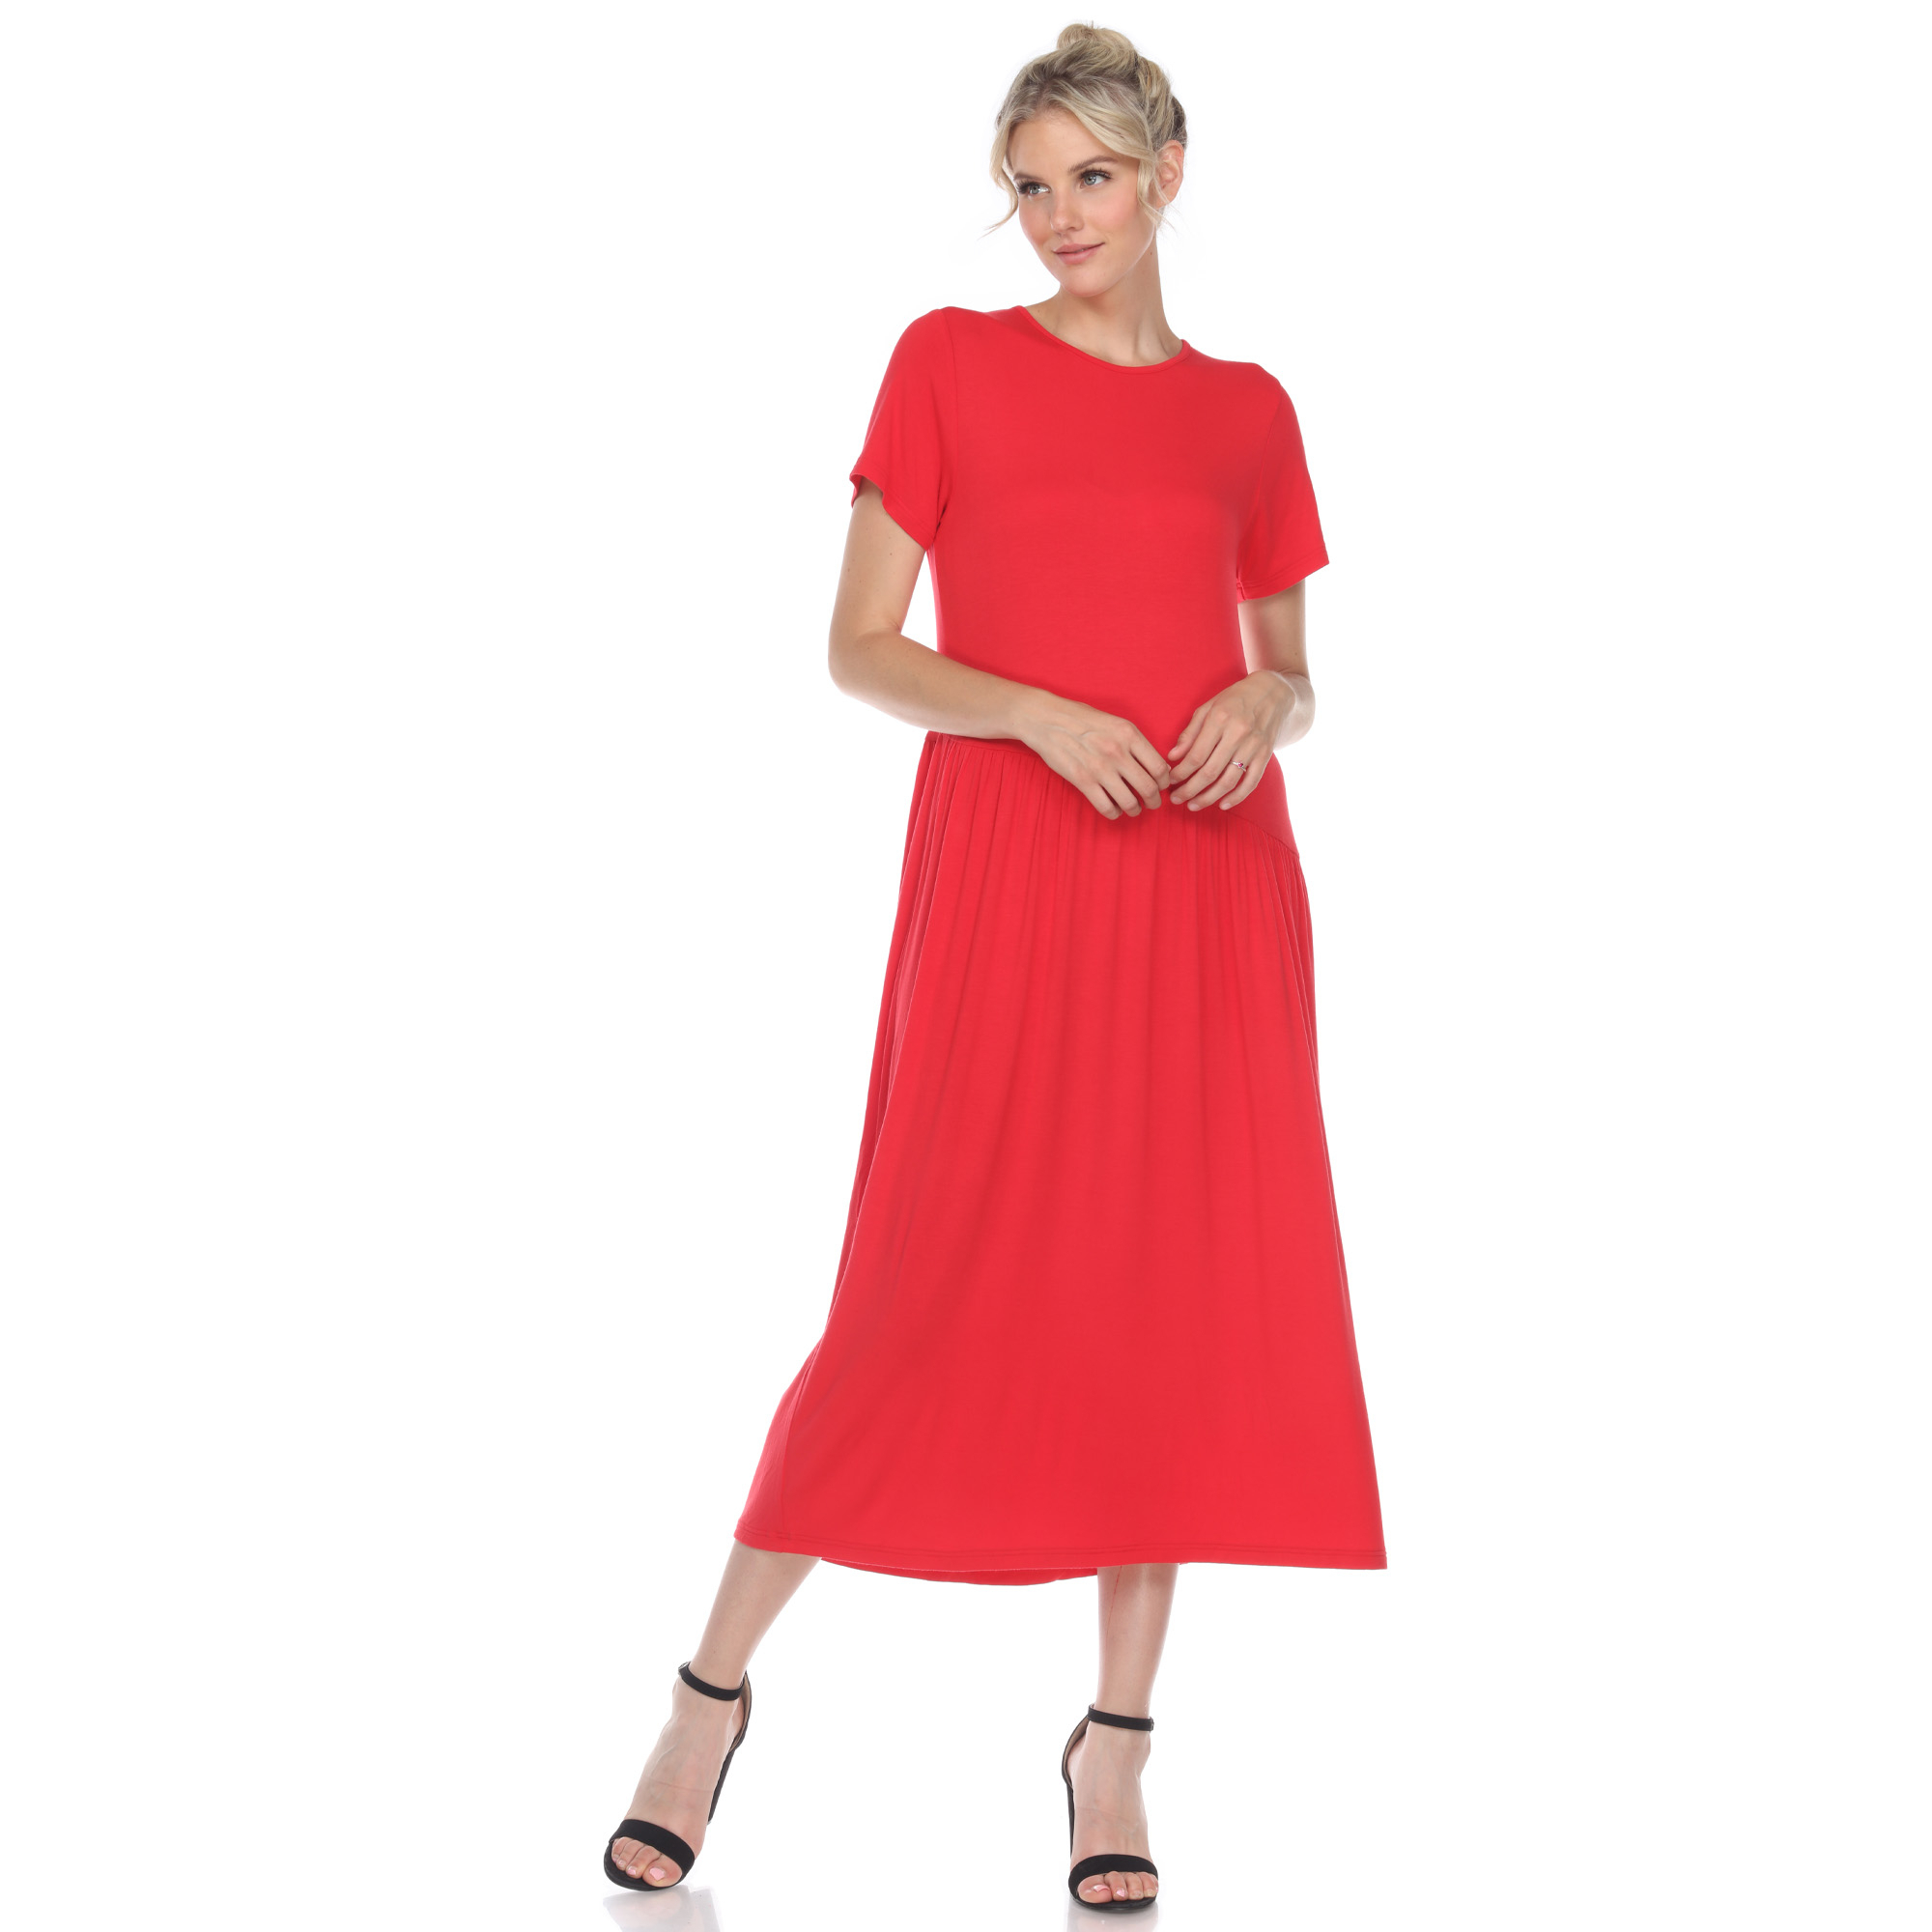 White Mark Womenâs Short Sleeve Maxi Dress - Red, 2X